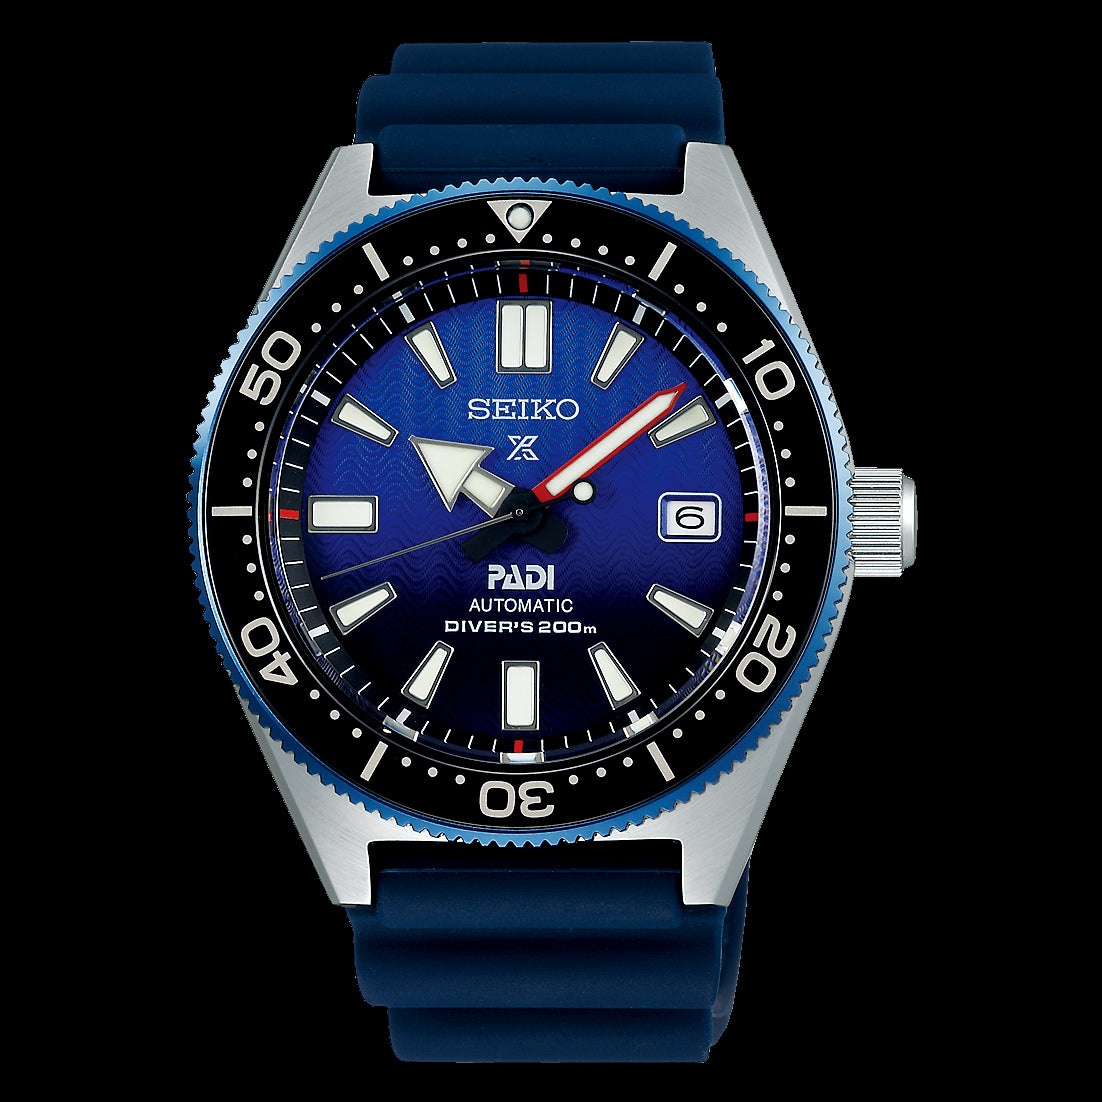 The Seiko PADI Gradient Prospex SPB071 Dive Watch